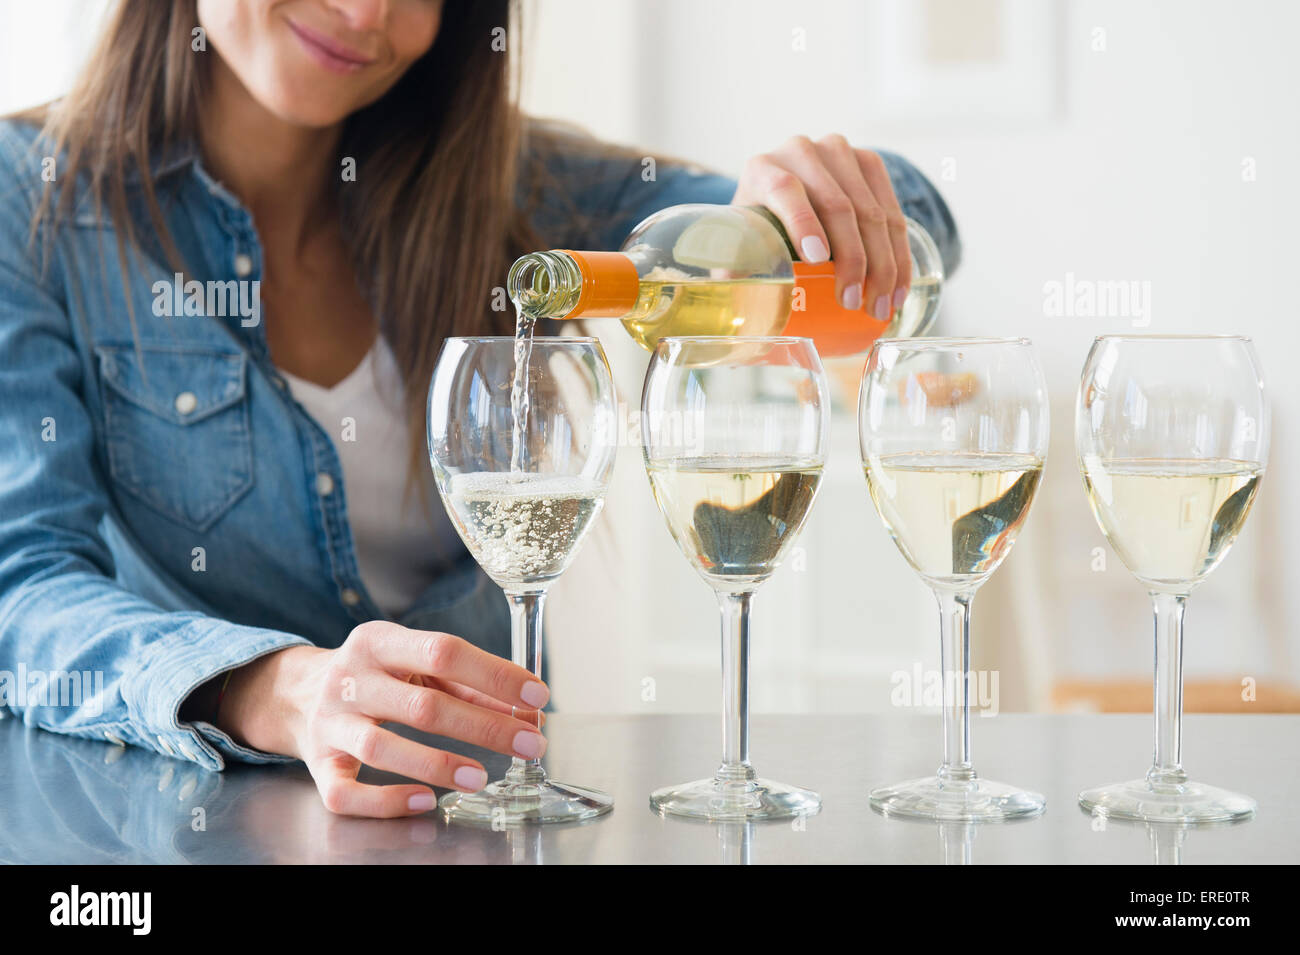 Caucasian woman pouring glasses of white wine Stock Photo